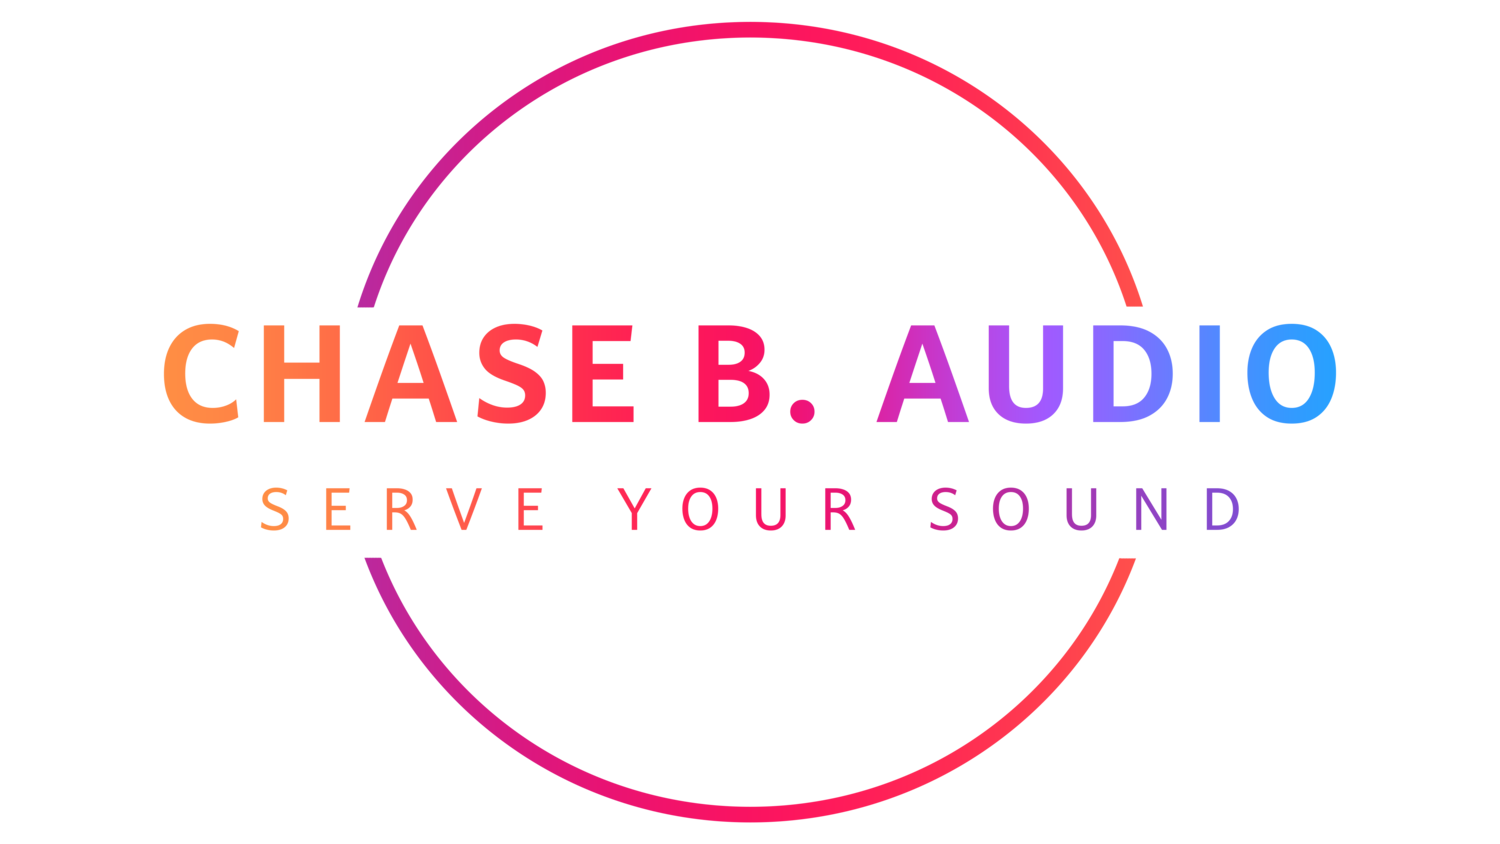 Chase B. Audio